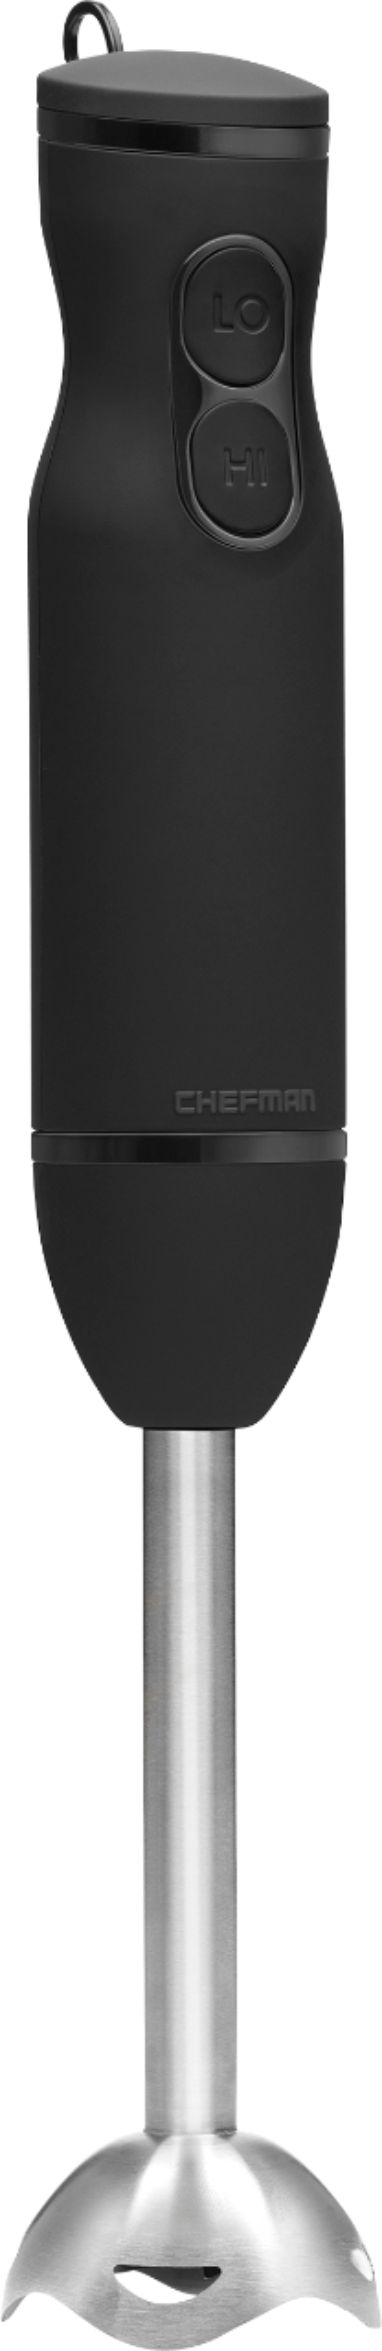 Commercial Chef CHIB50B Immersion Multi-Purpose Hand Blender, Black